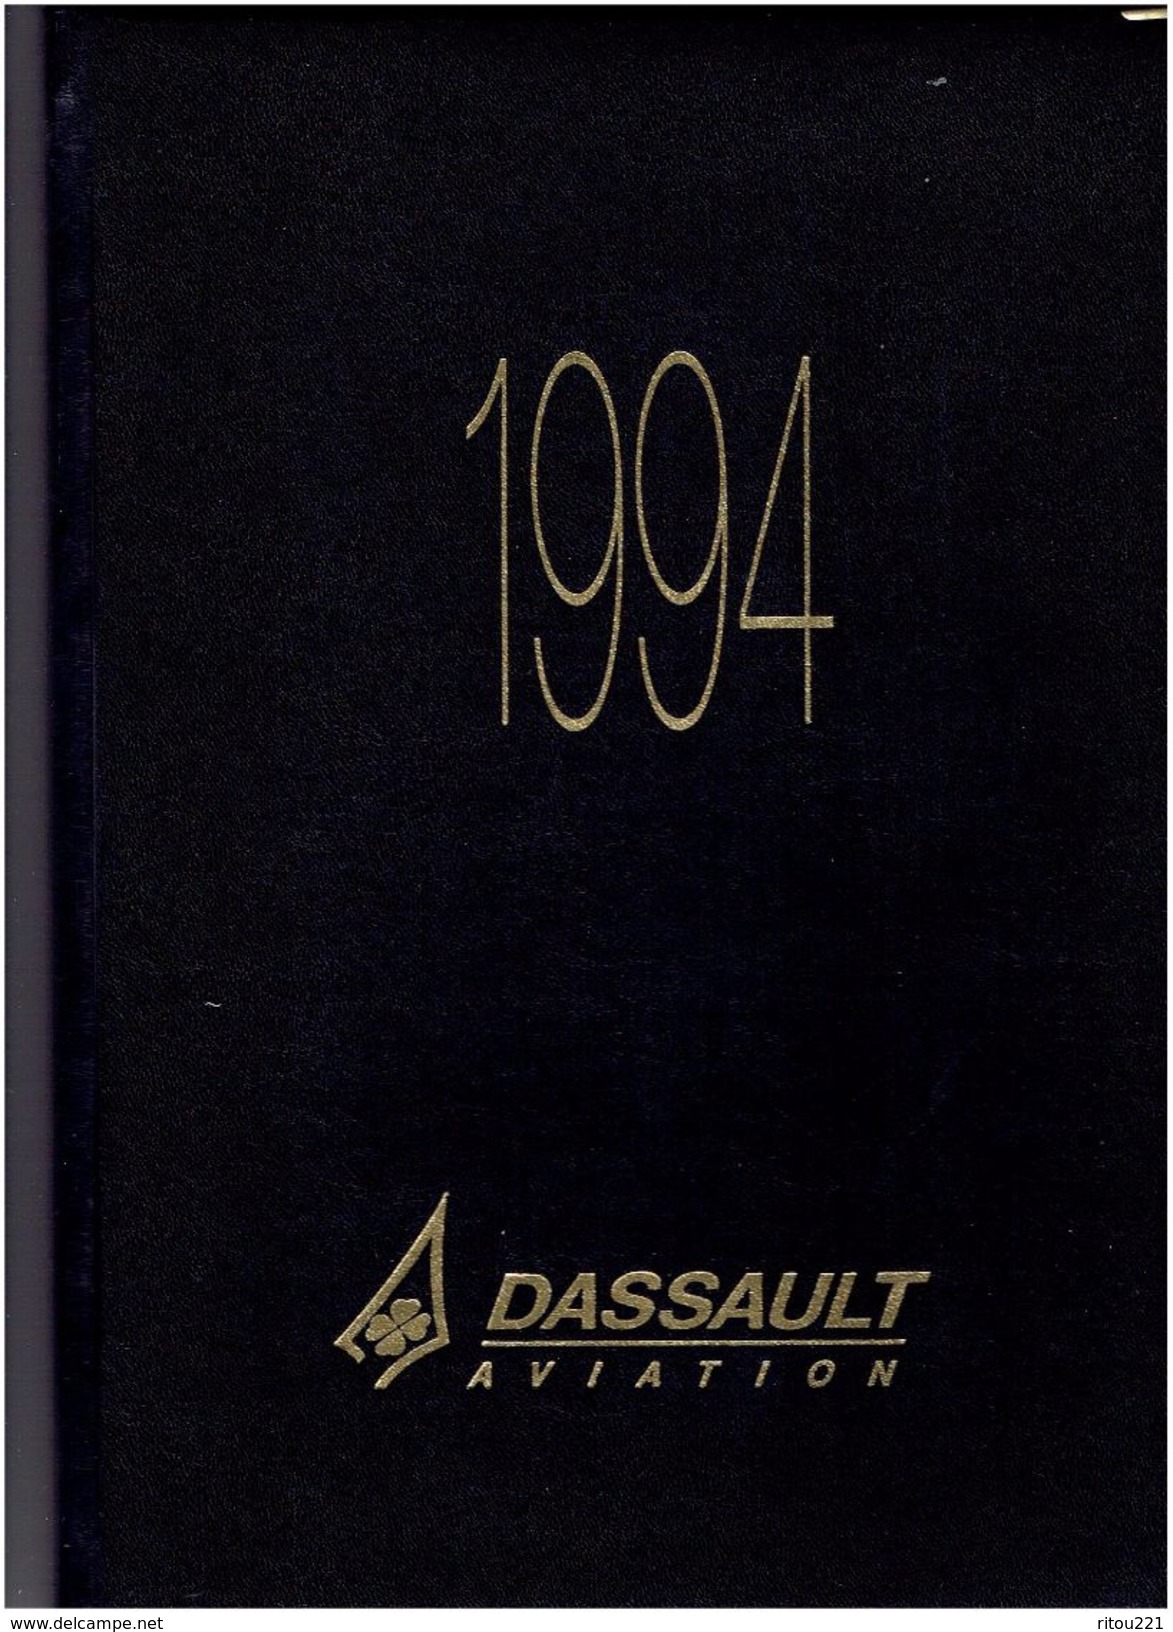 Agenda 1994 - DASSAULT AVIATION - Avion ESPACE VOITURE DE COURSE PEUGEOT 905 Esso HELARY BOUCHUT - Cancelleria